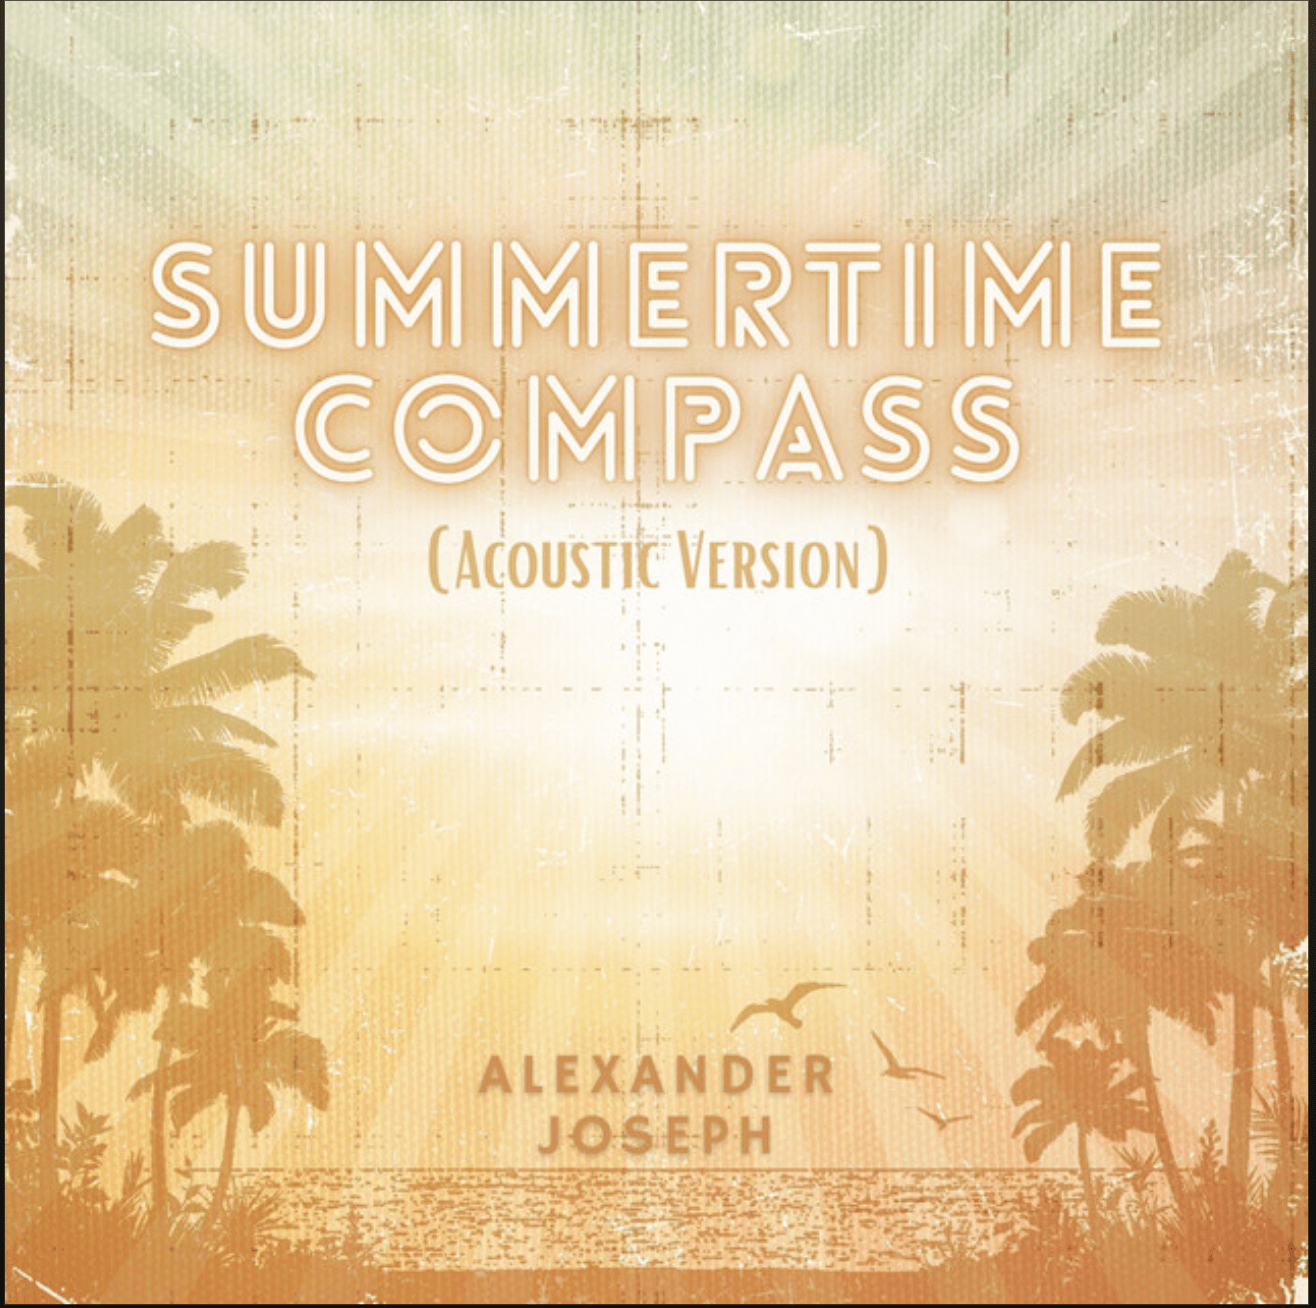 Summertime Compass (Acoustic Version) By ALEXANDER JOSEPH